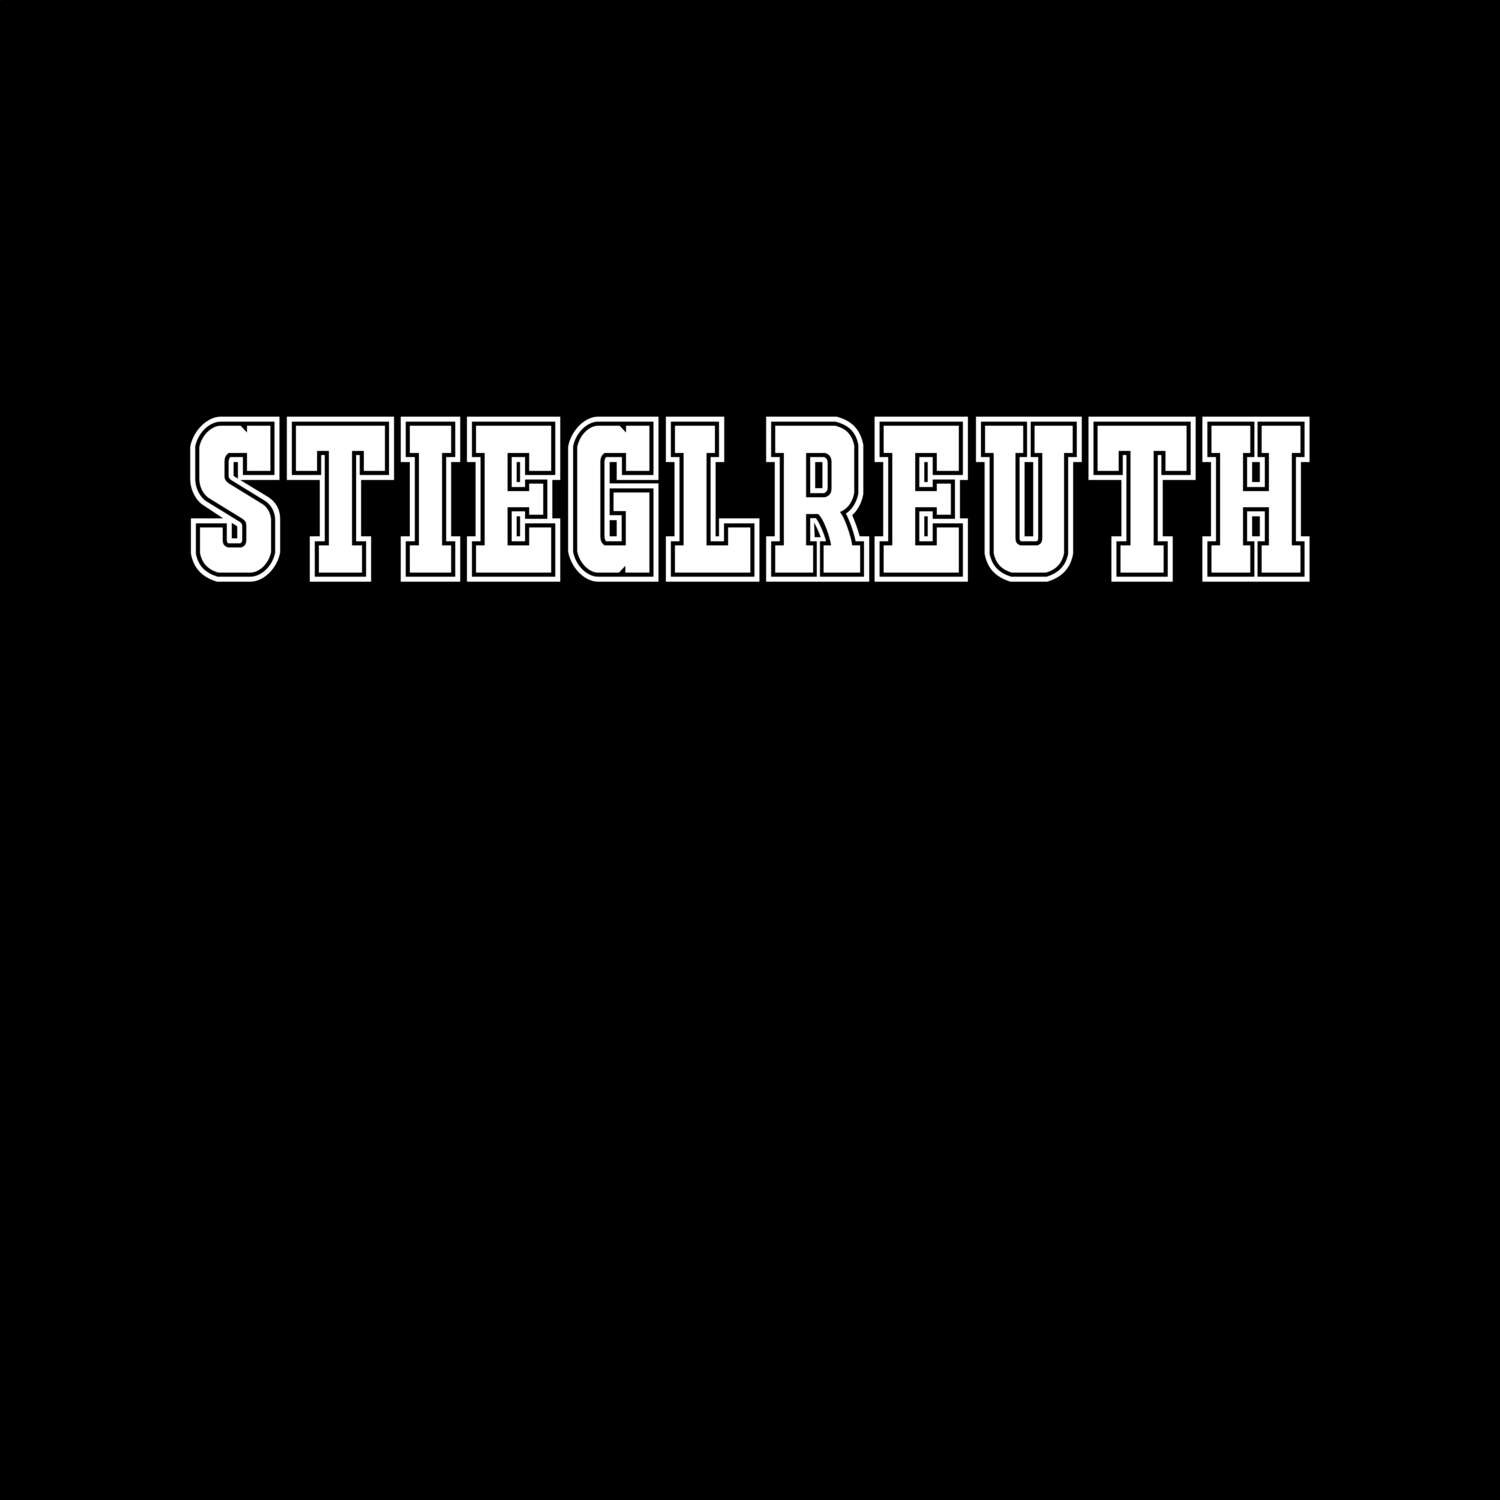 Stieglreuth T-Shirt »Classic«